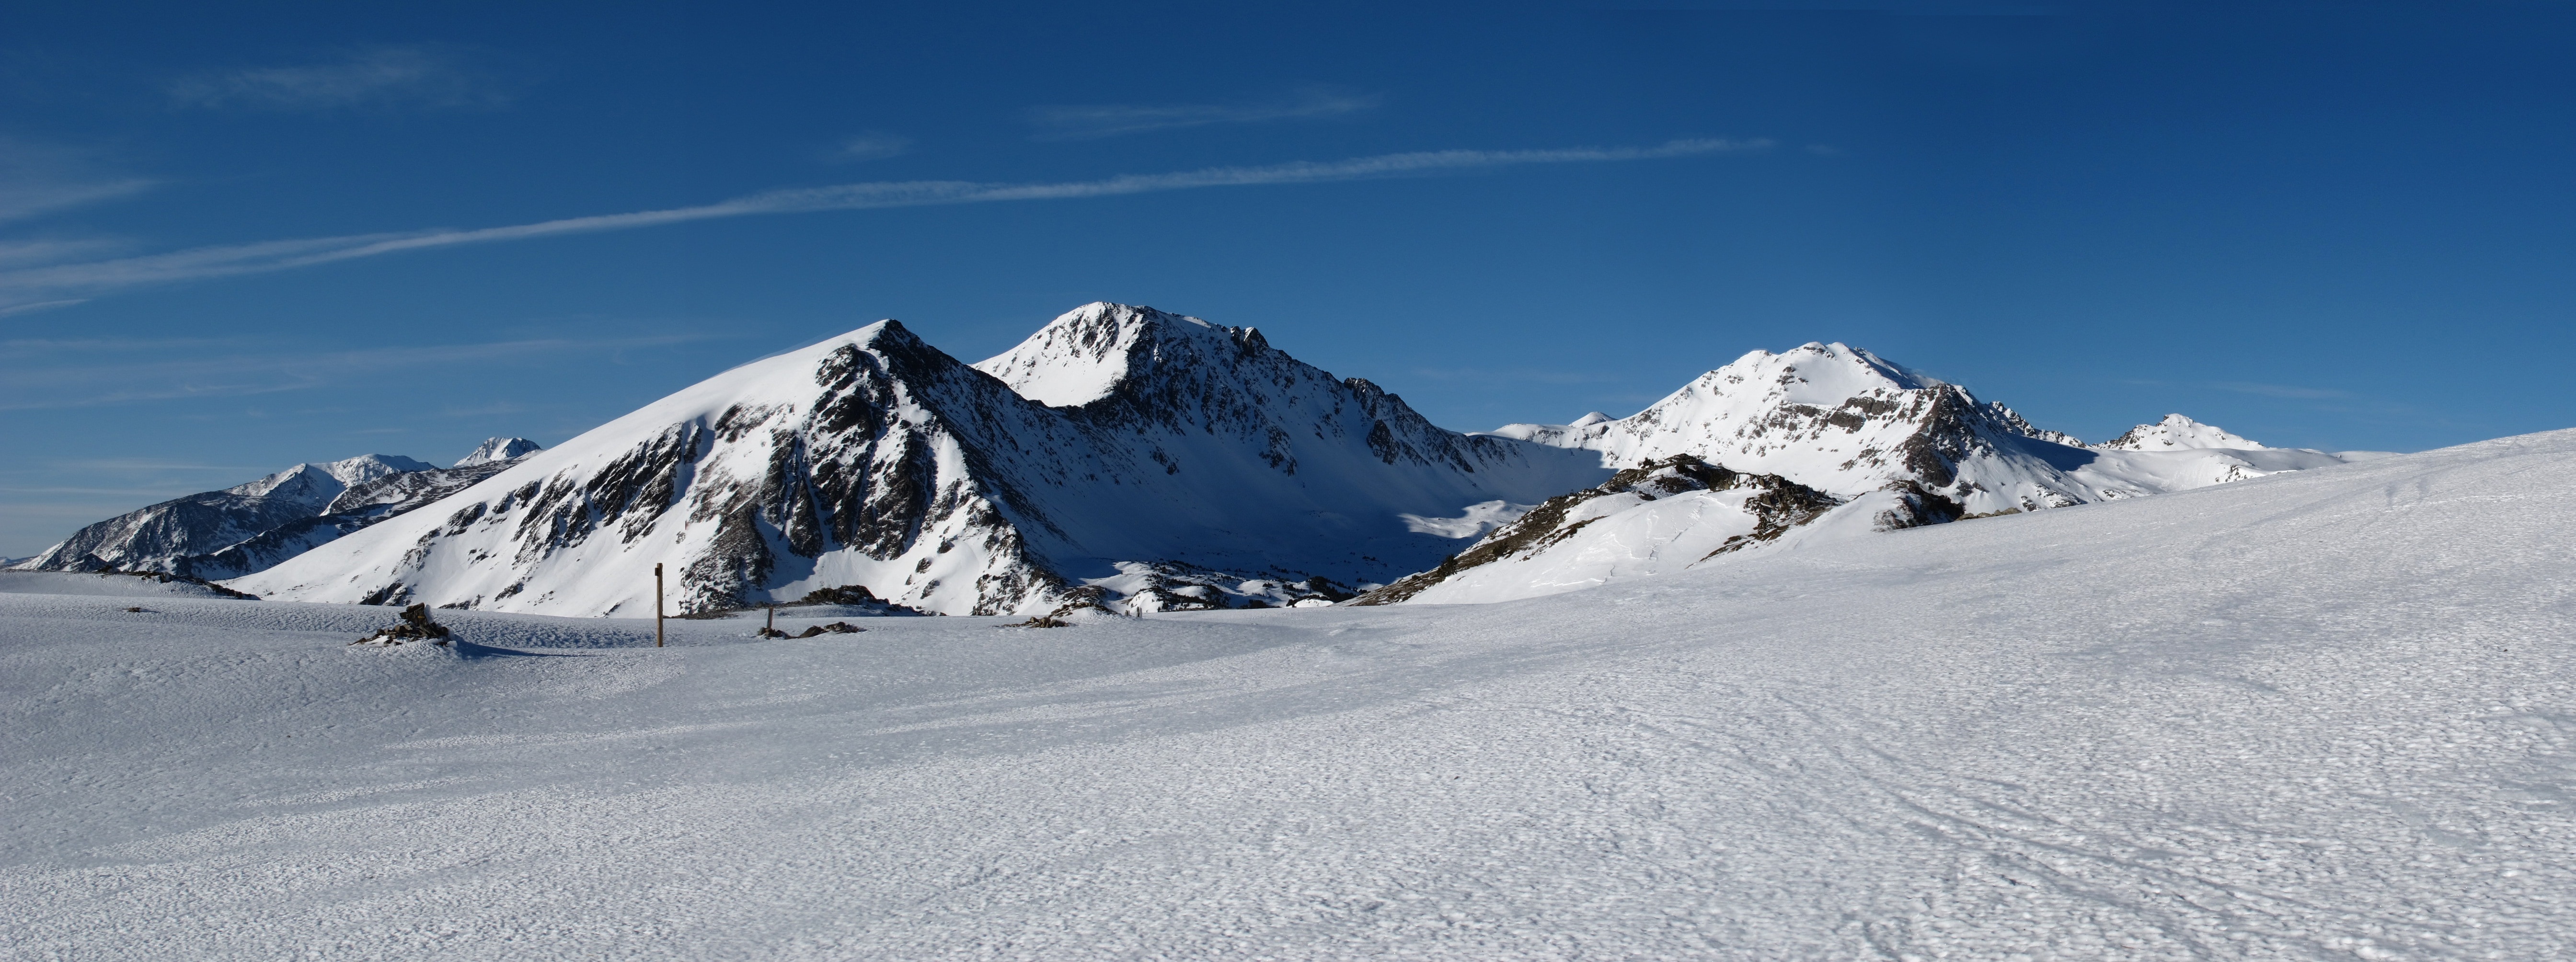 white mountain with snow during daytime